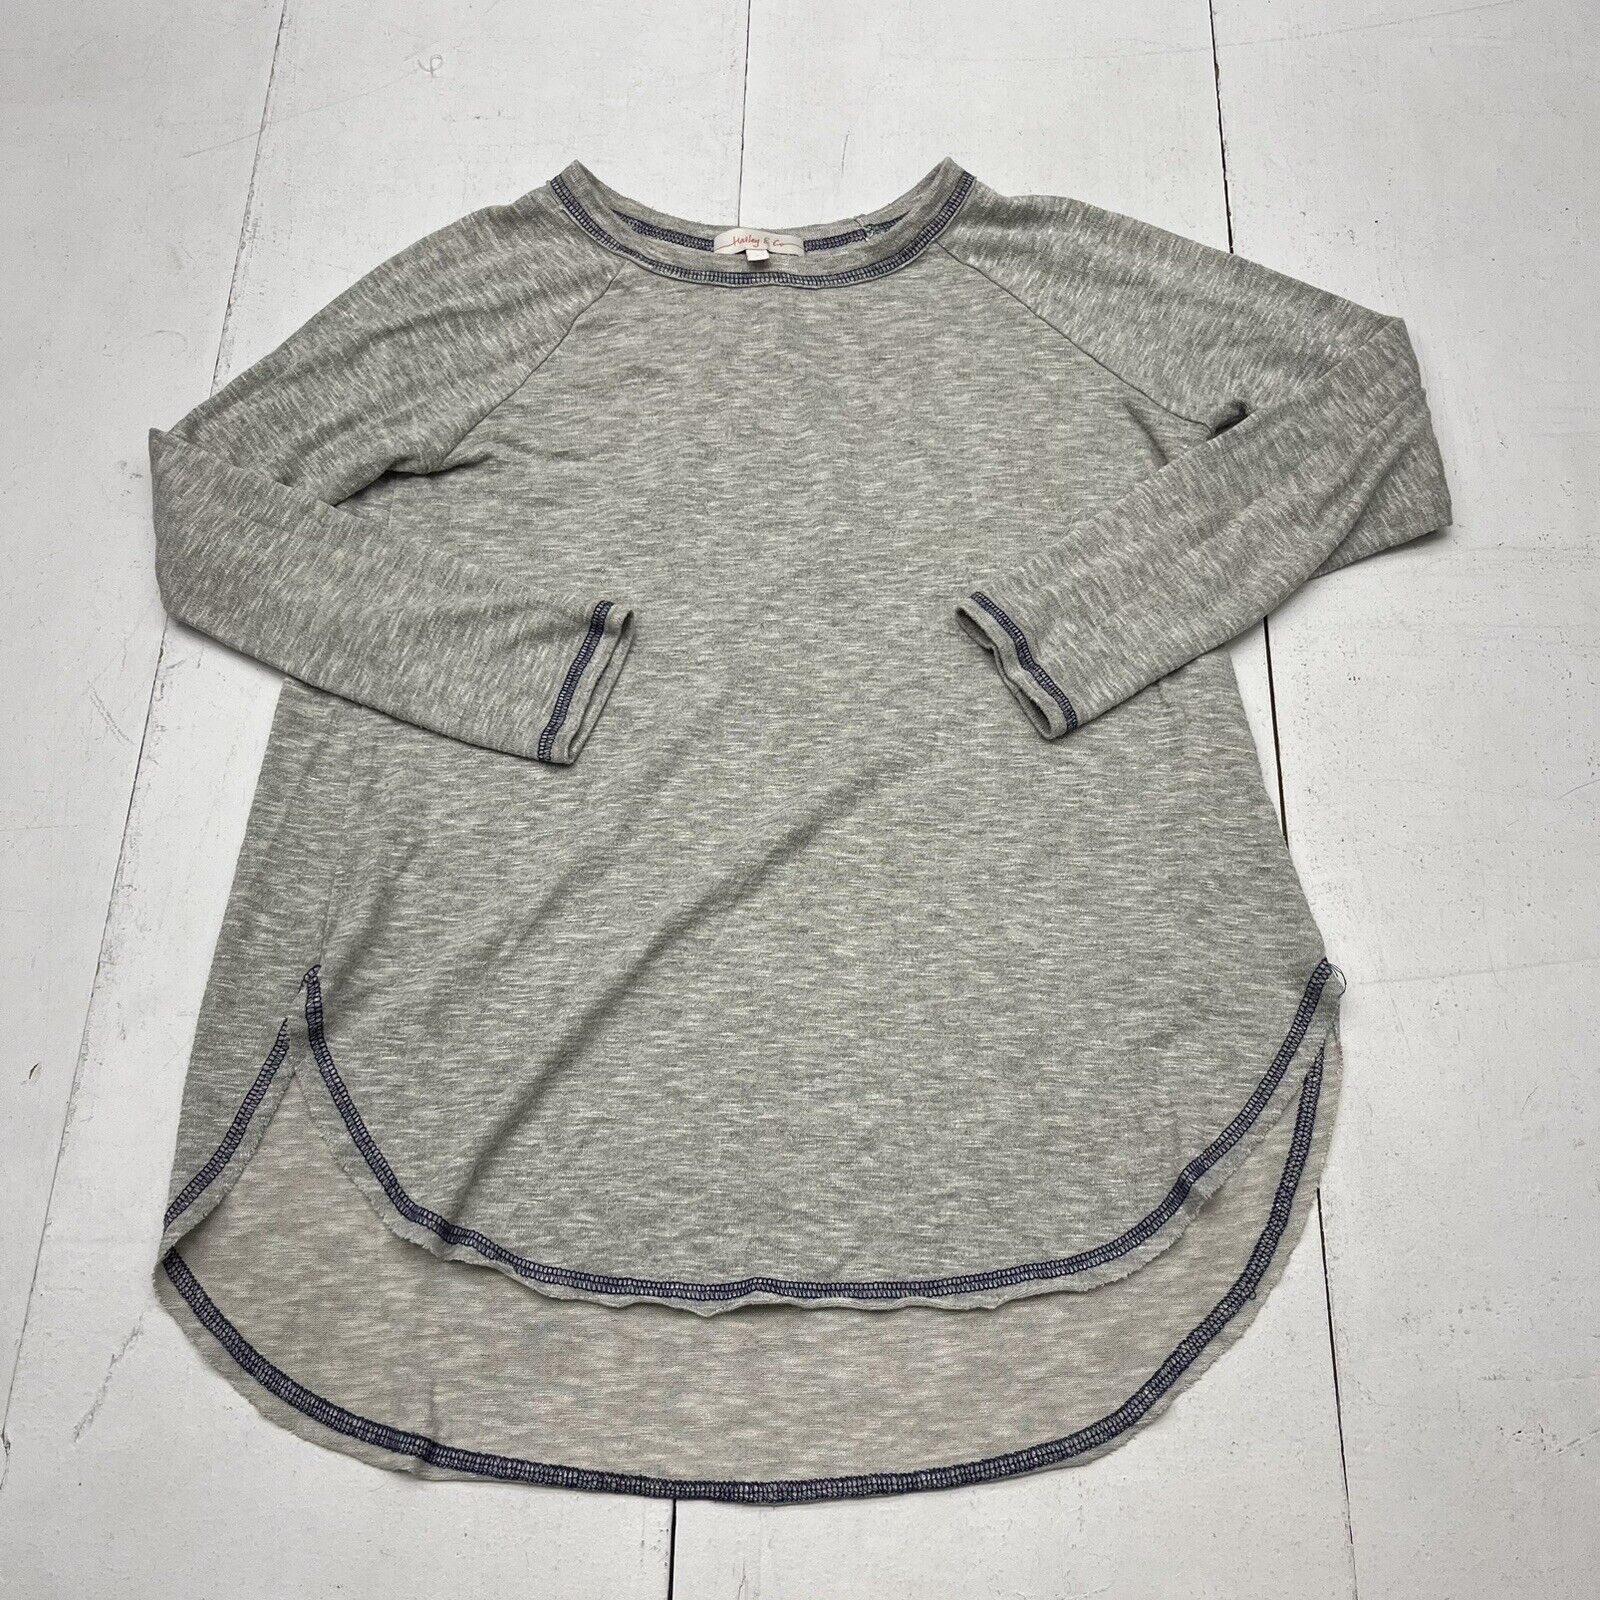 Hailey & Co Gray Long Sleeve T-Shirt Women’s Size Small